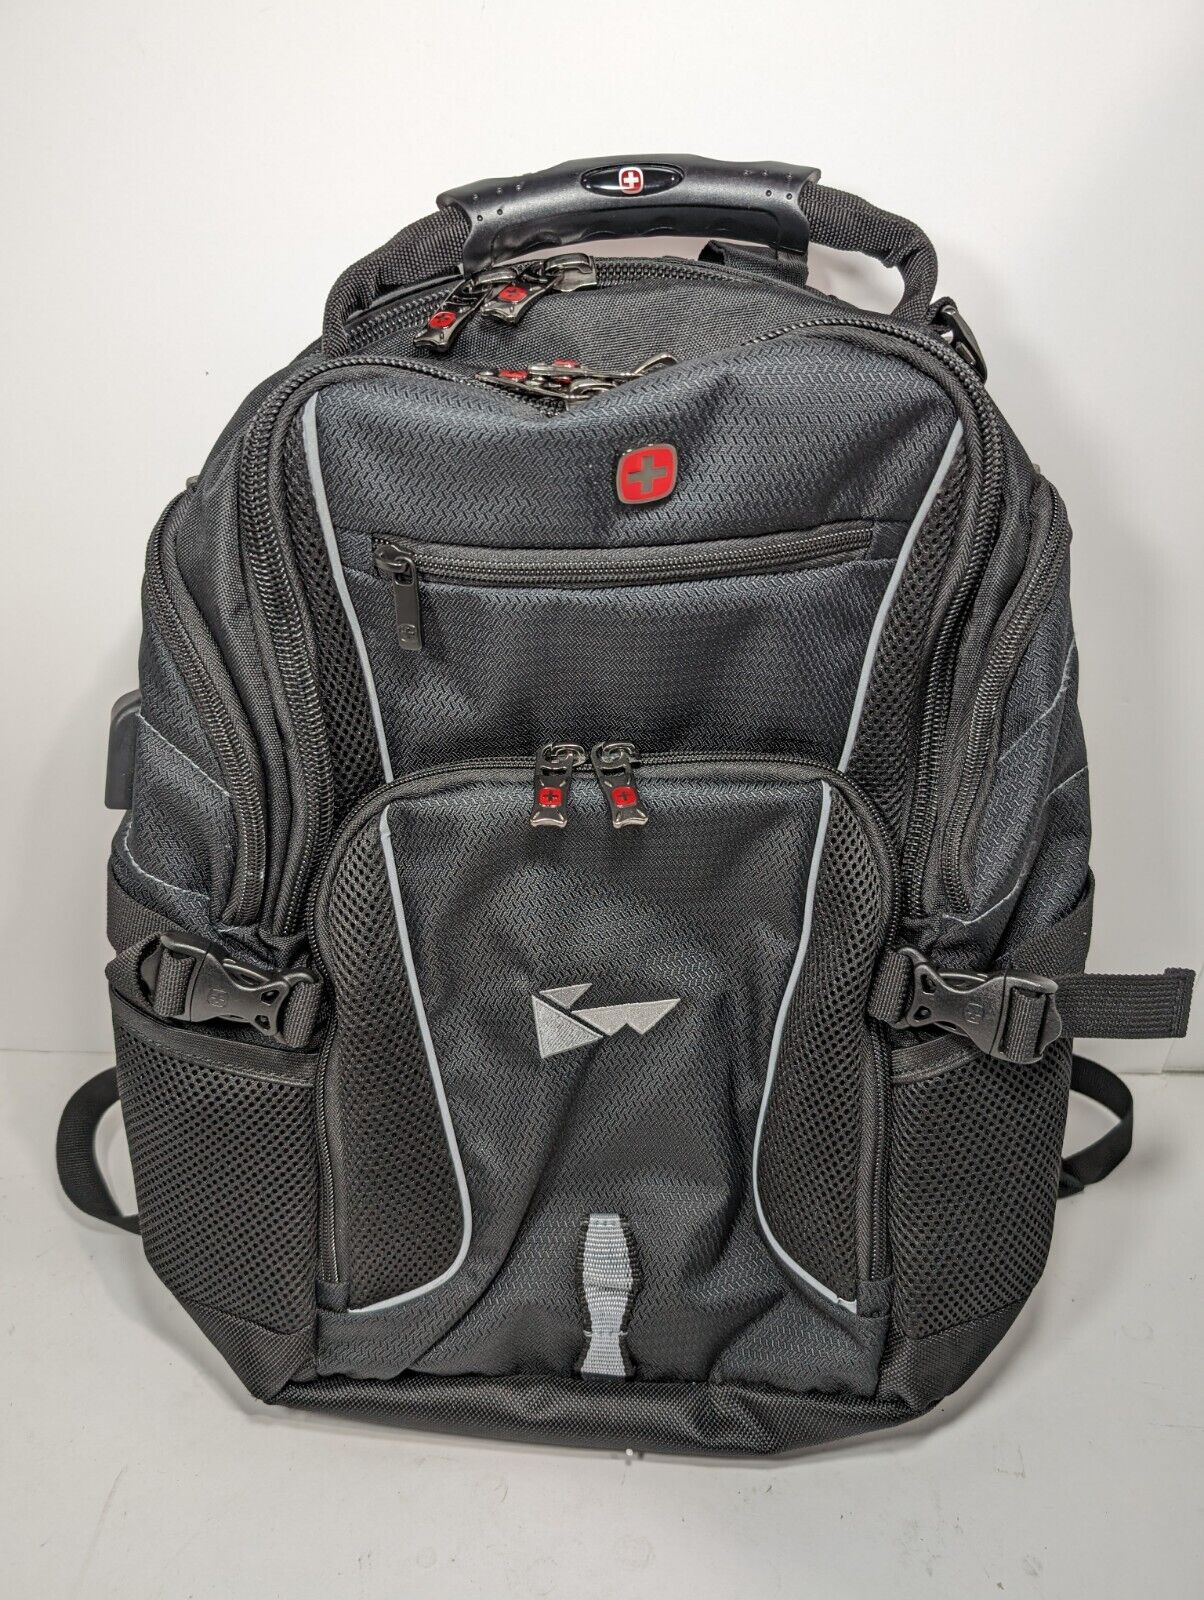 Swiss Gear Wenger Airflow Hiking School Laptop Backpack Black - Used Once